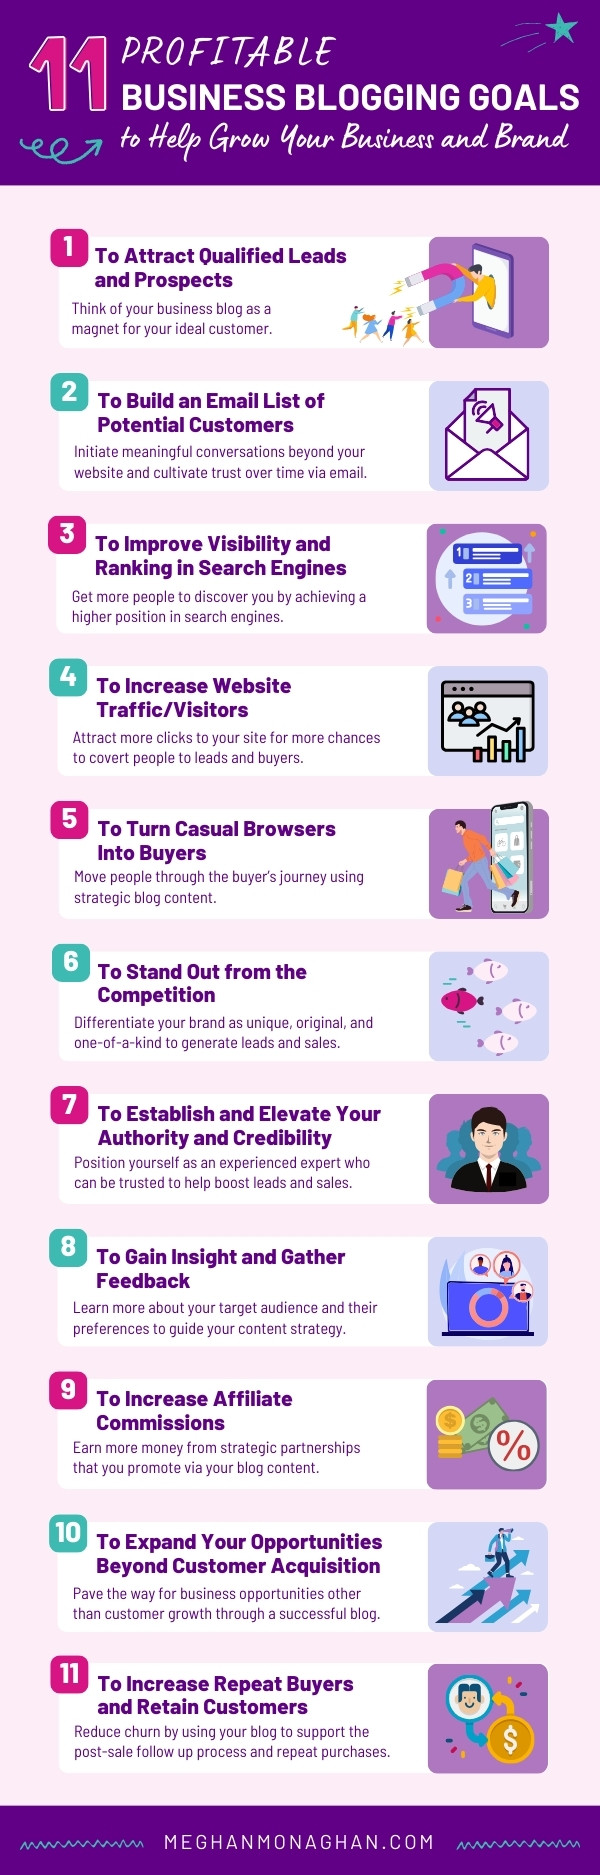 business blogging goals infographic